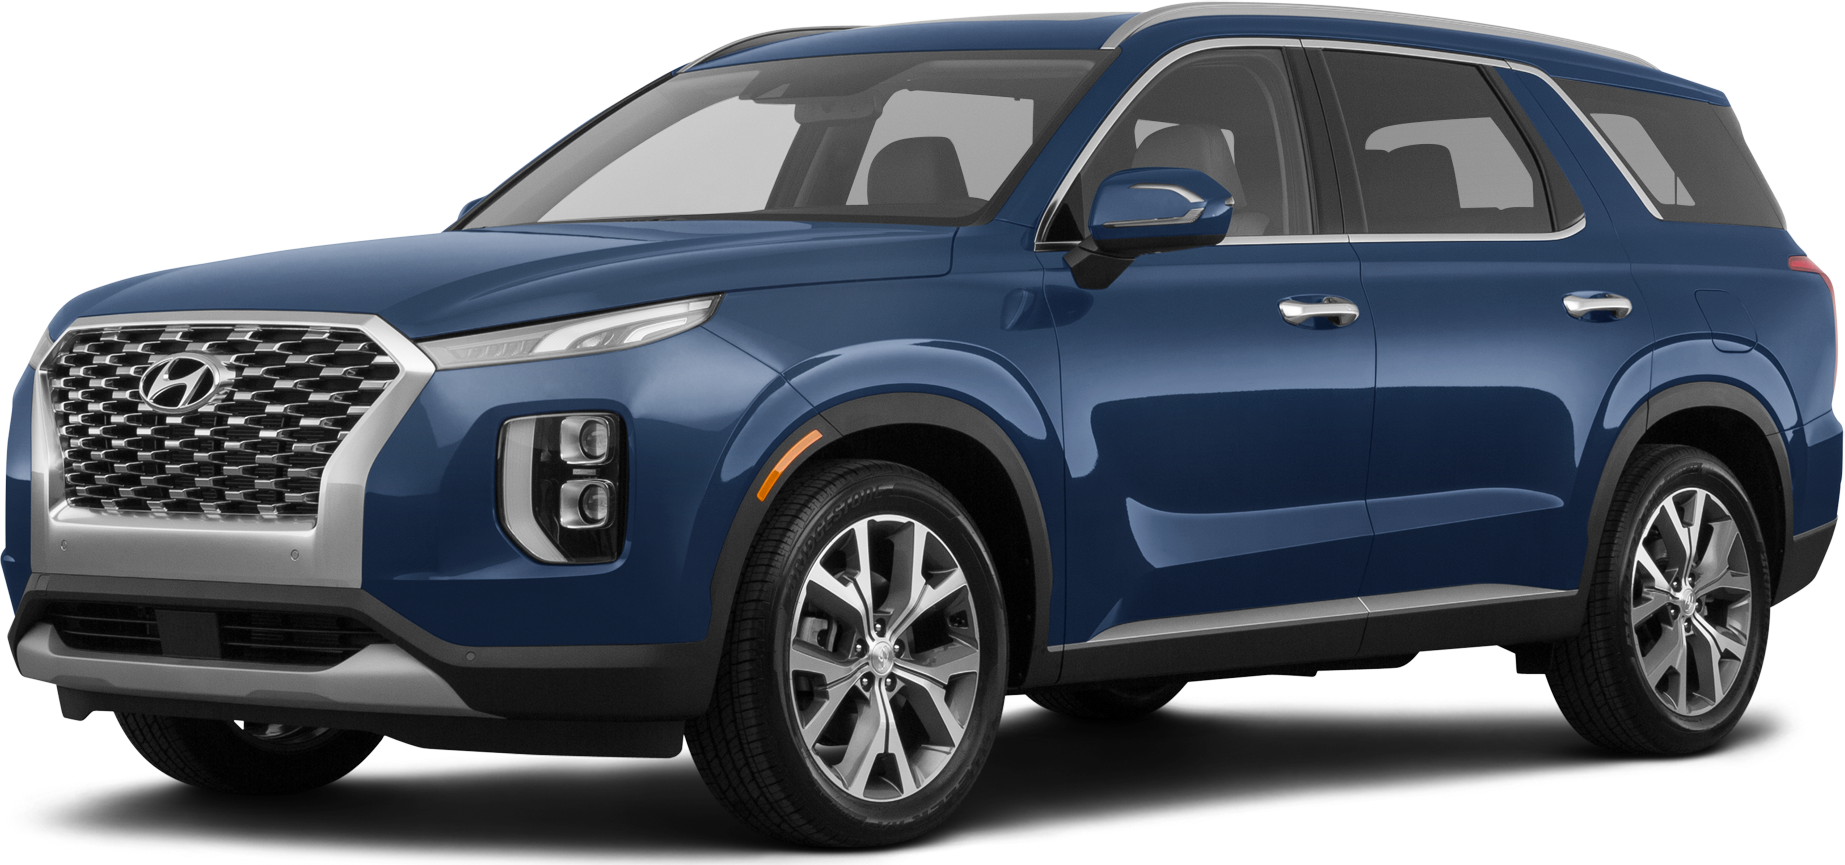 2020 Hyundai Palisade Price, Value, Ratings & Reviews